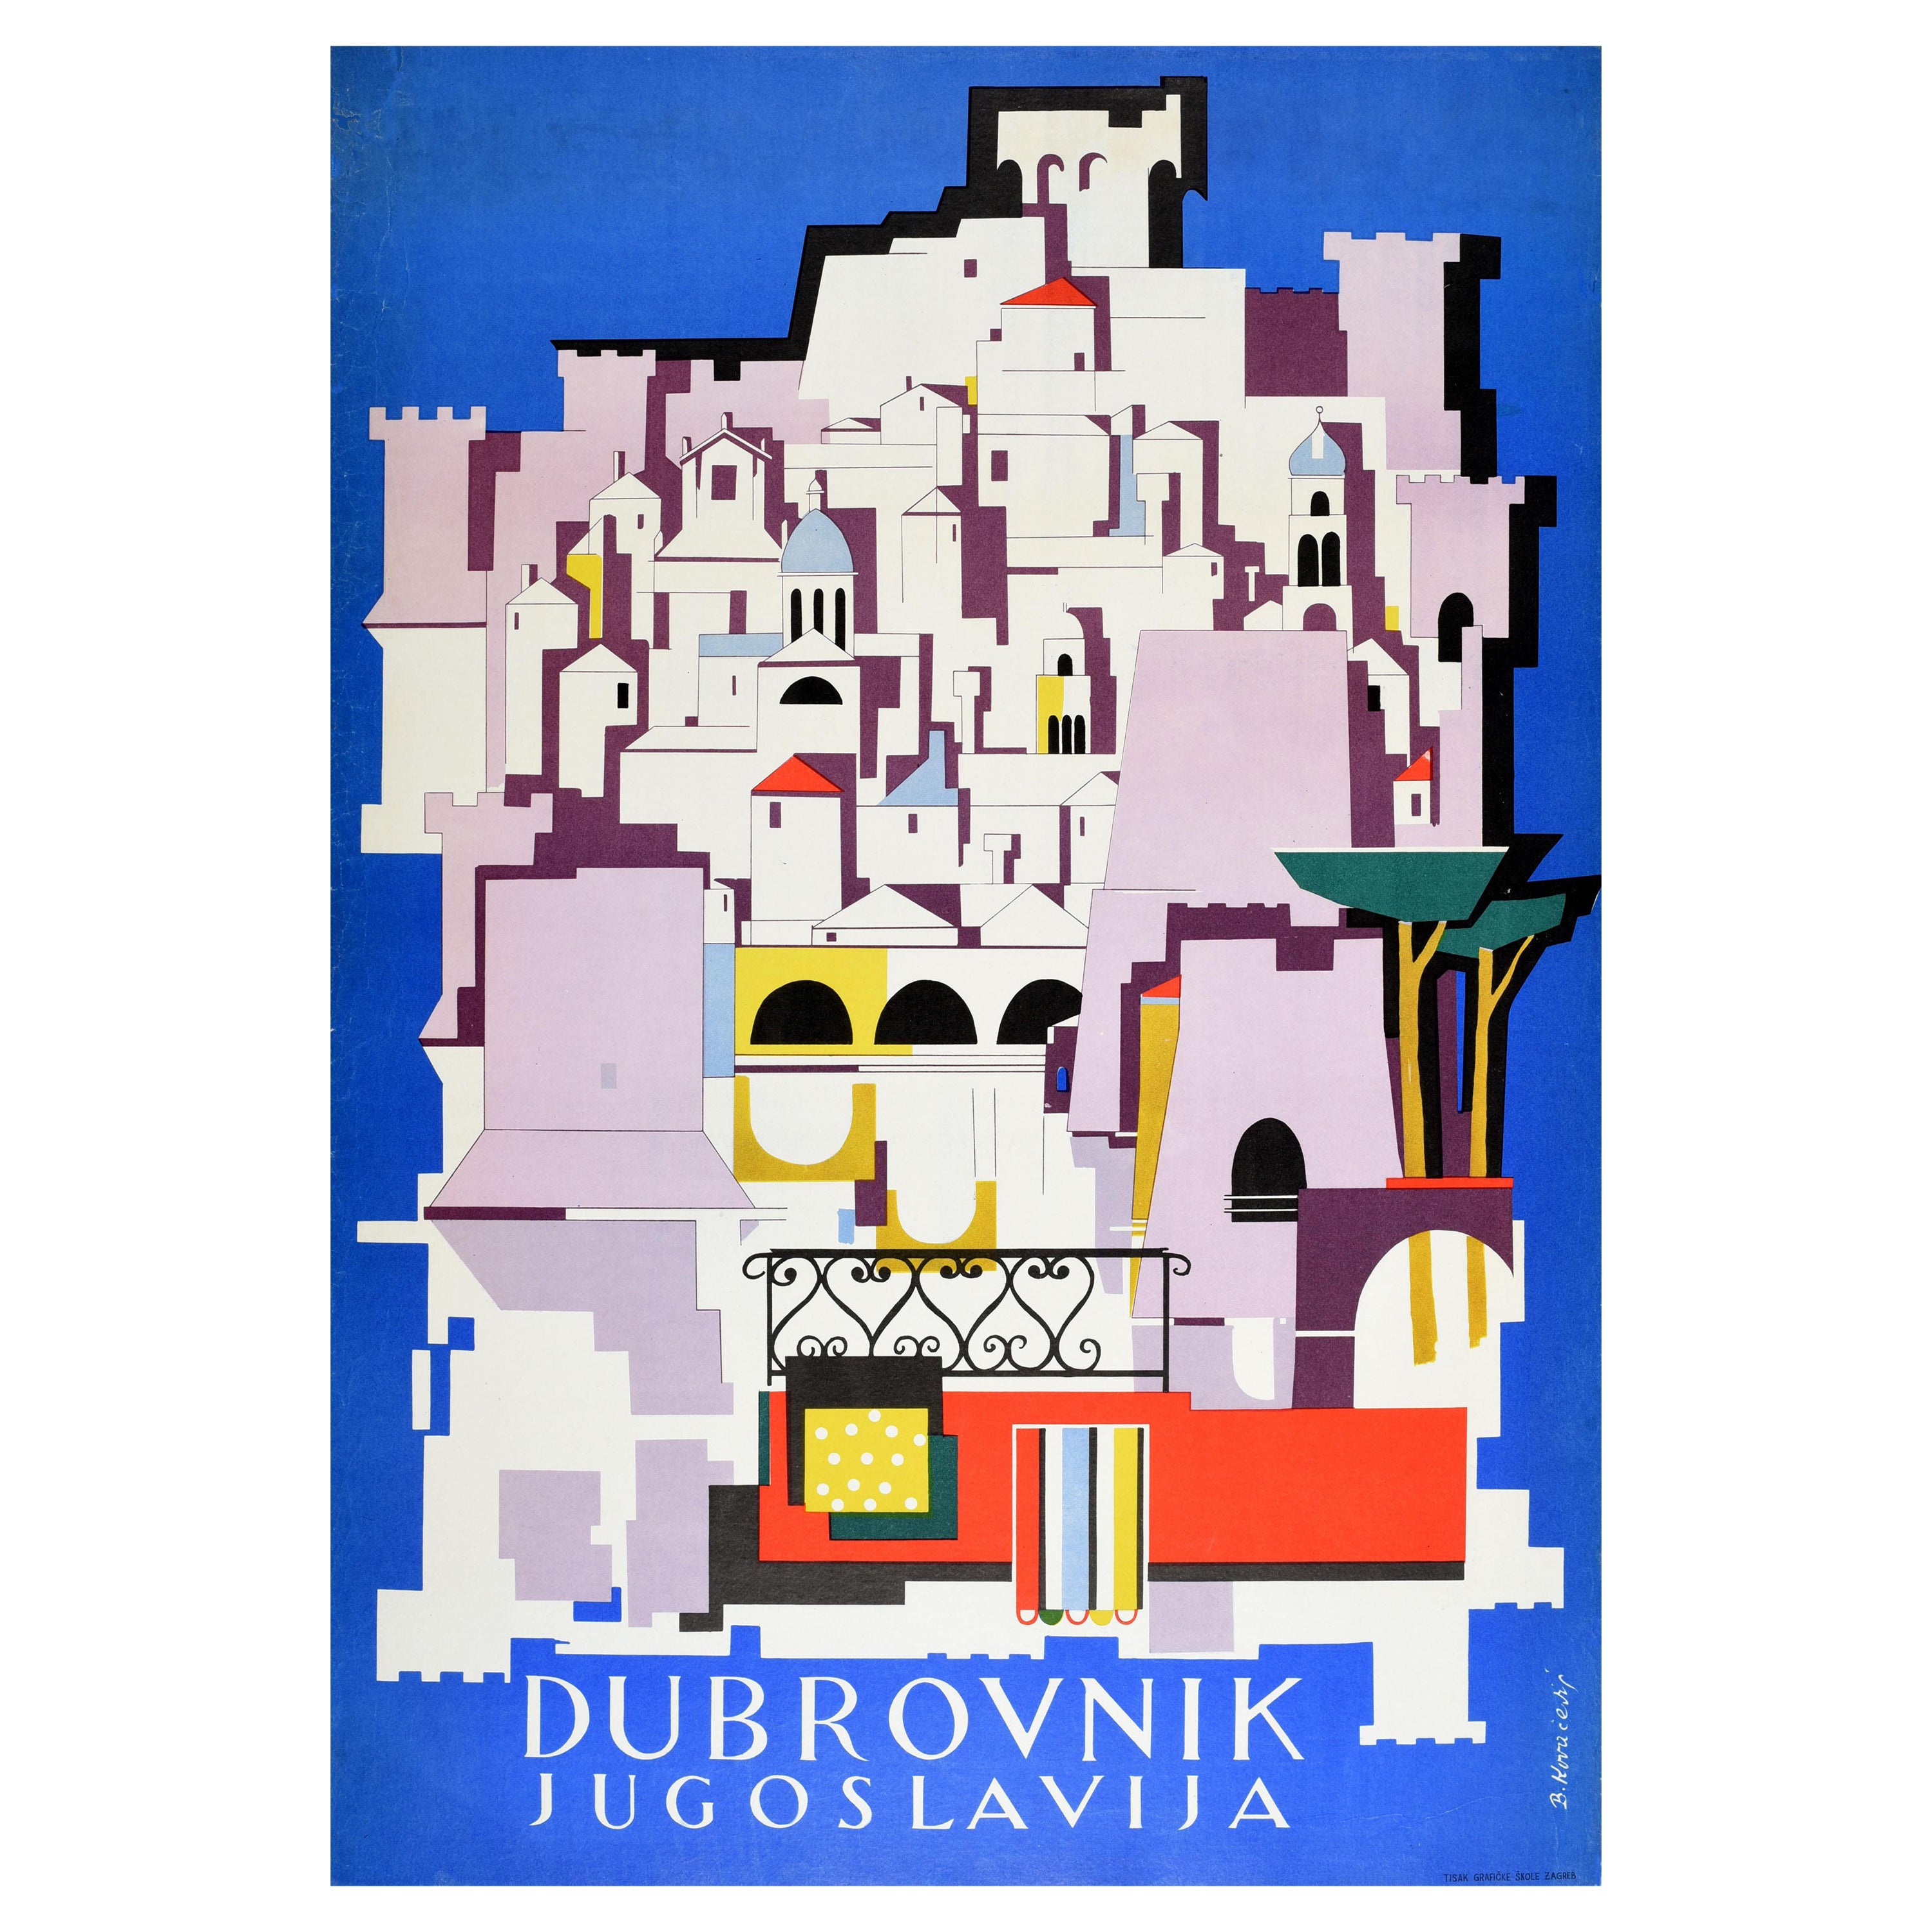 Original Vintage Travel Poster Dubrovnik Jugoslavija Yugoslavia Old Town Seaport